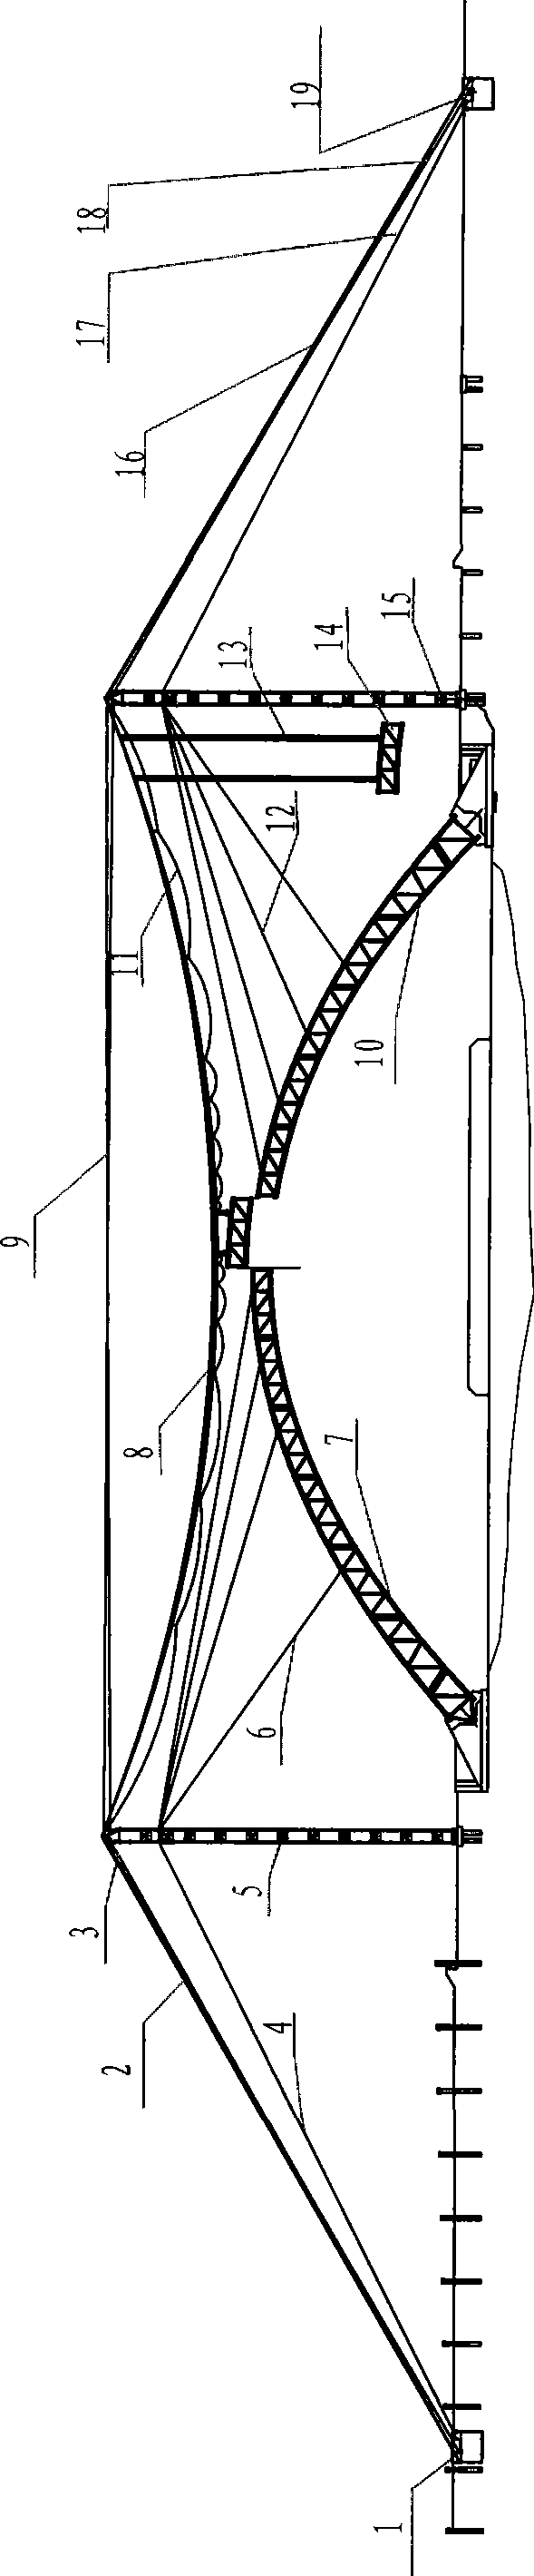 Non-stand construction method for large bridge arch rib